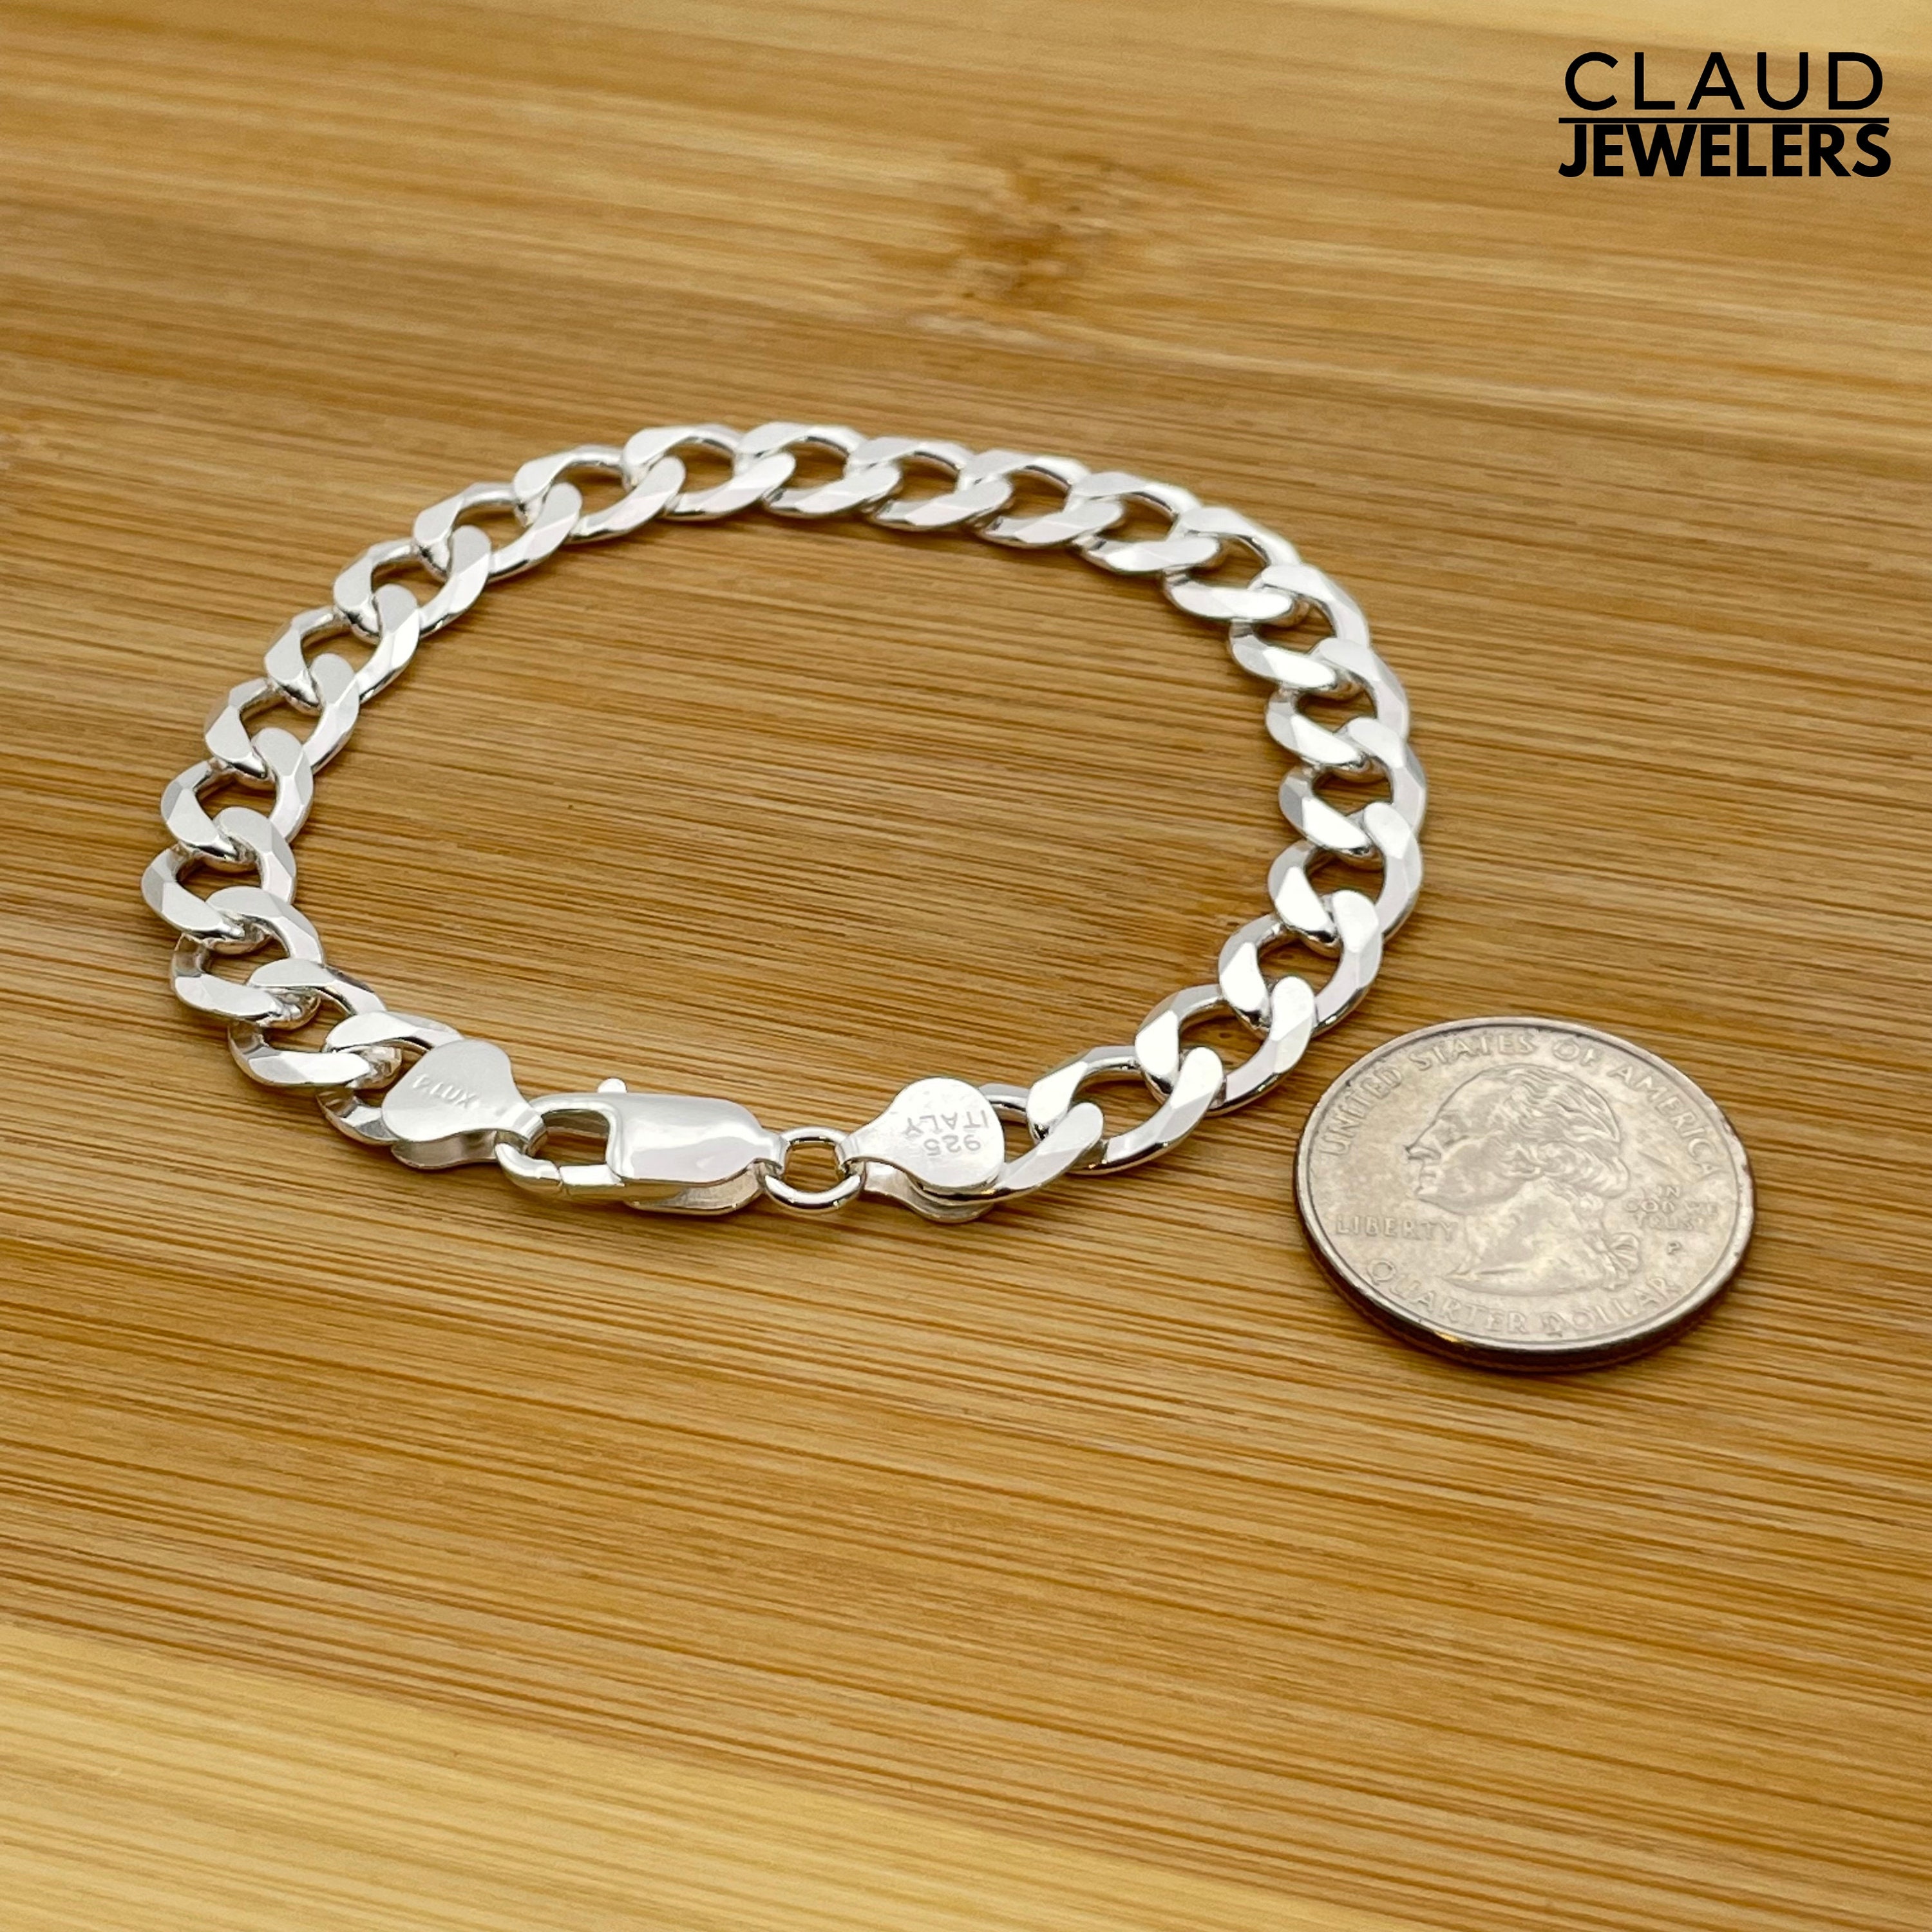 Zancan silver ceramic curb chain bracelet.